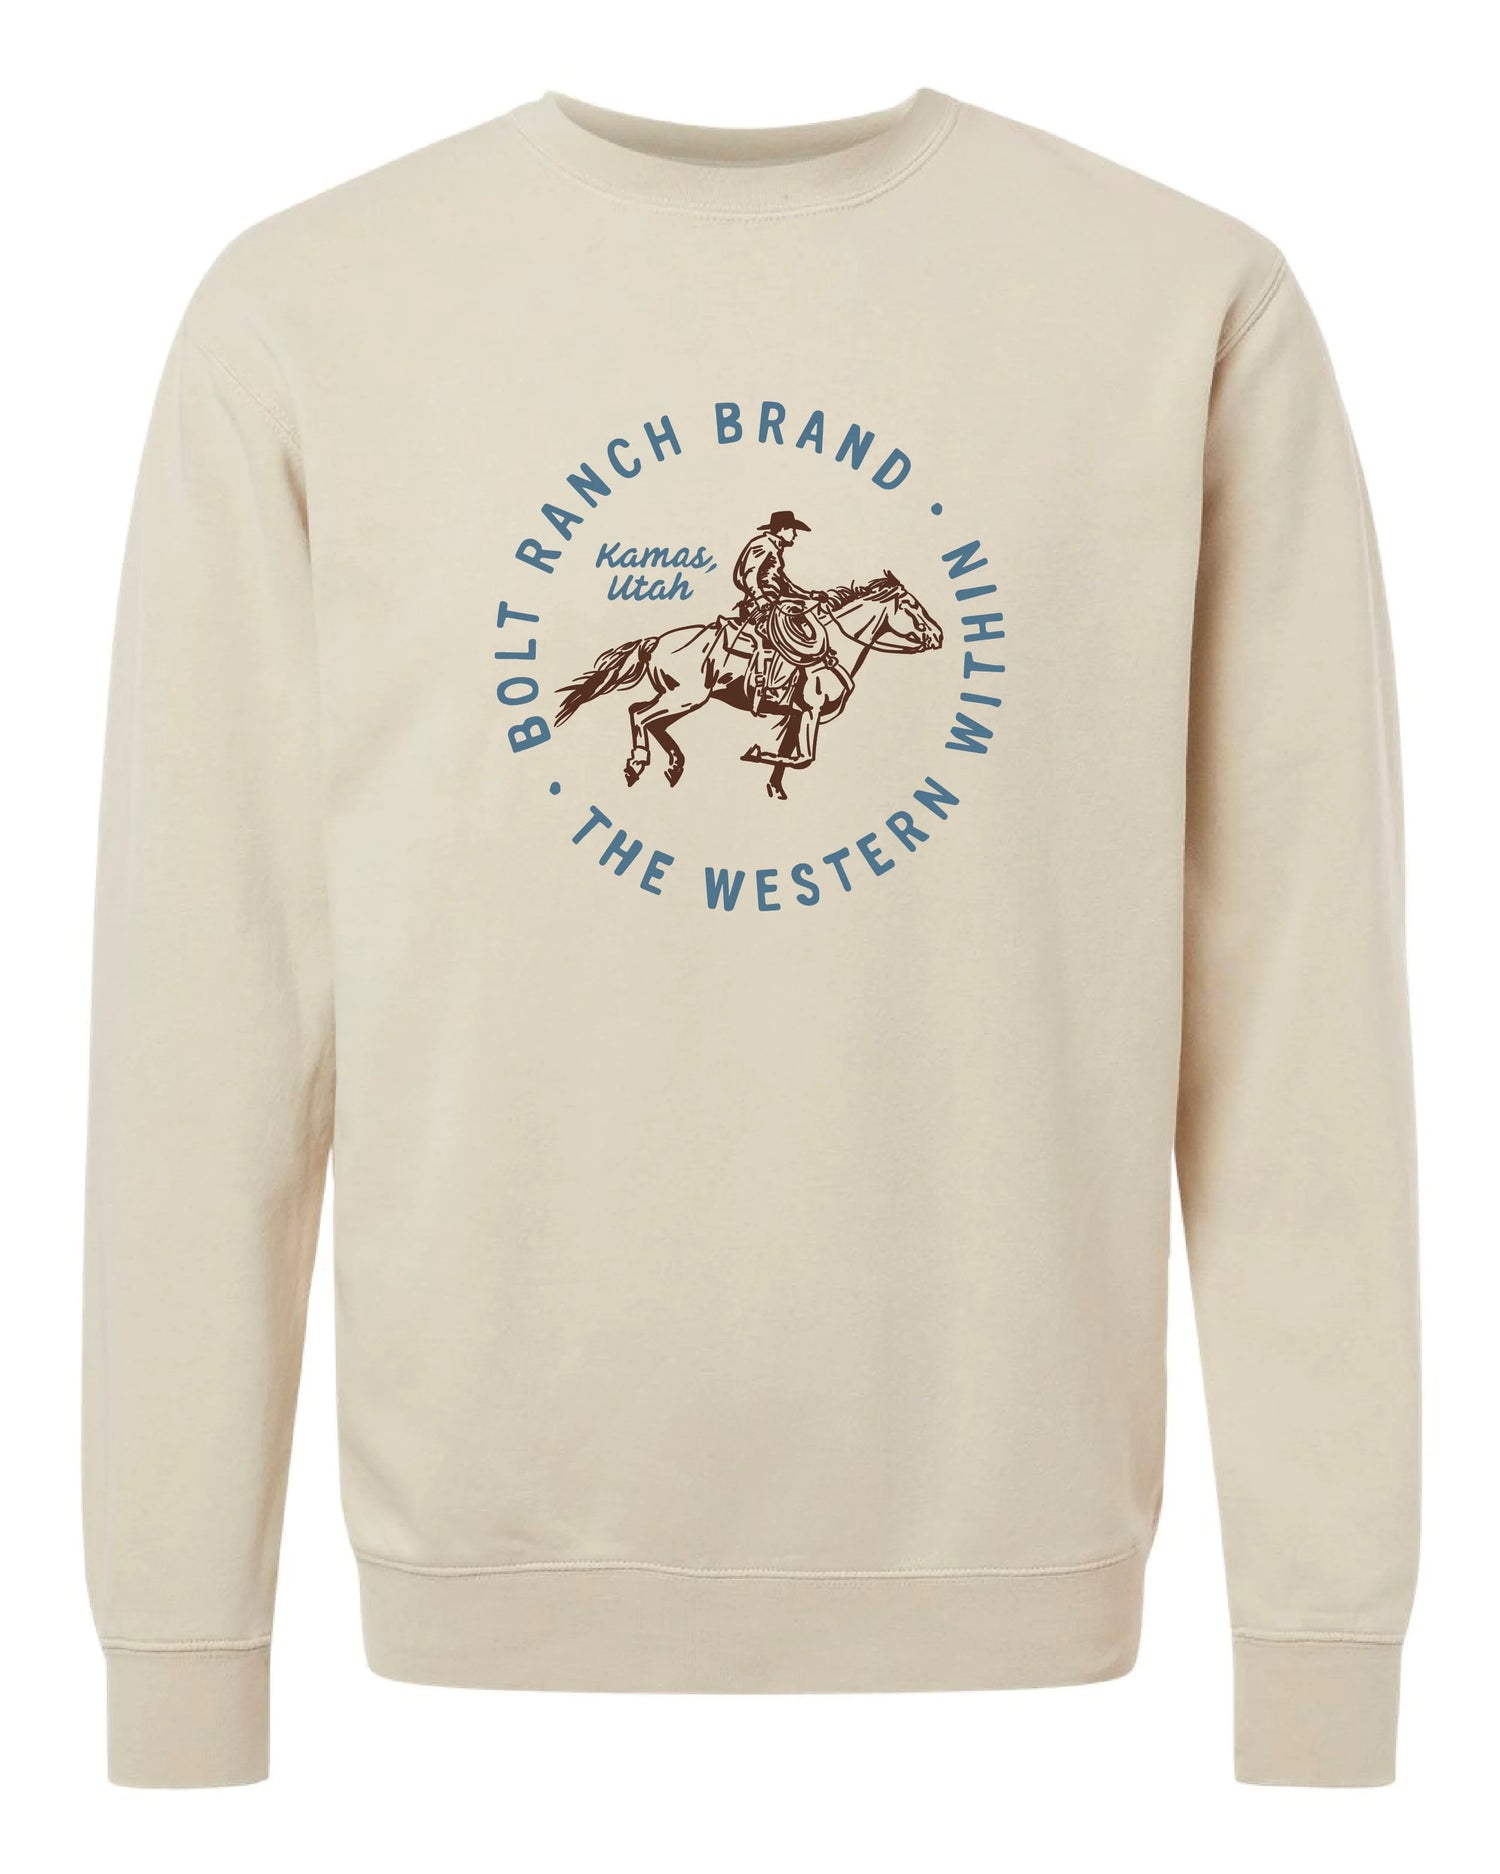 Bolt Ranch Adult Crew Neck Sweatshirt - Cream